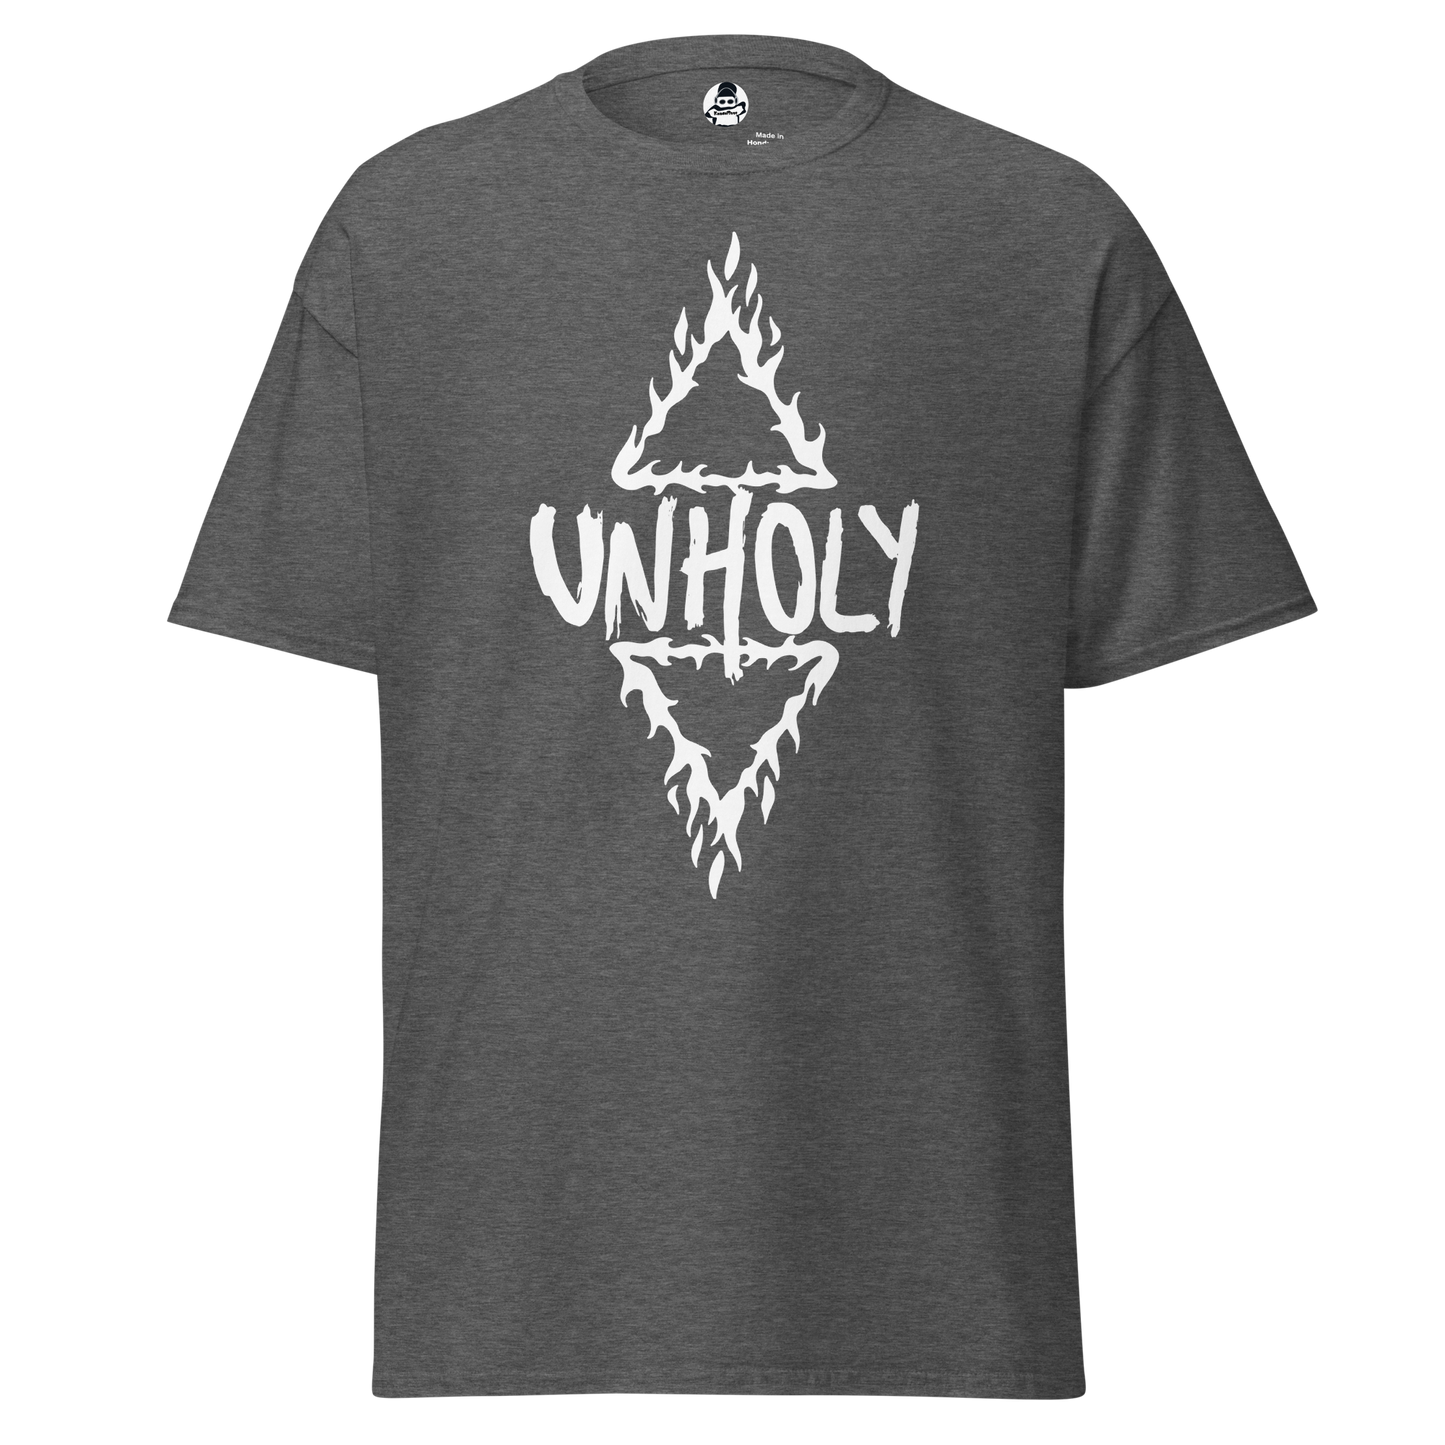 Unholy Fire T-Shirt from KazualTees